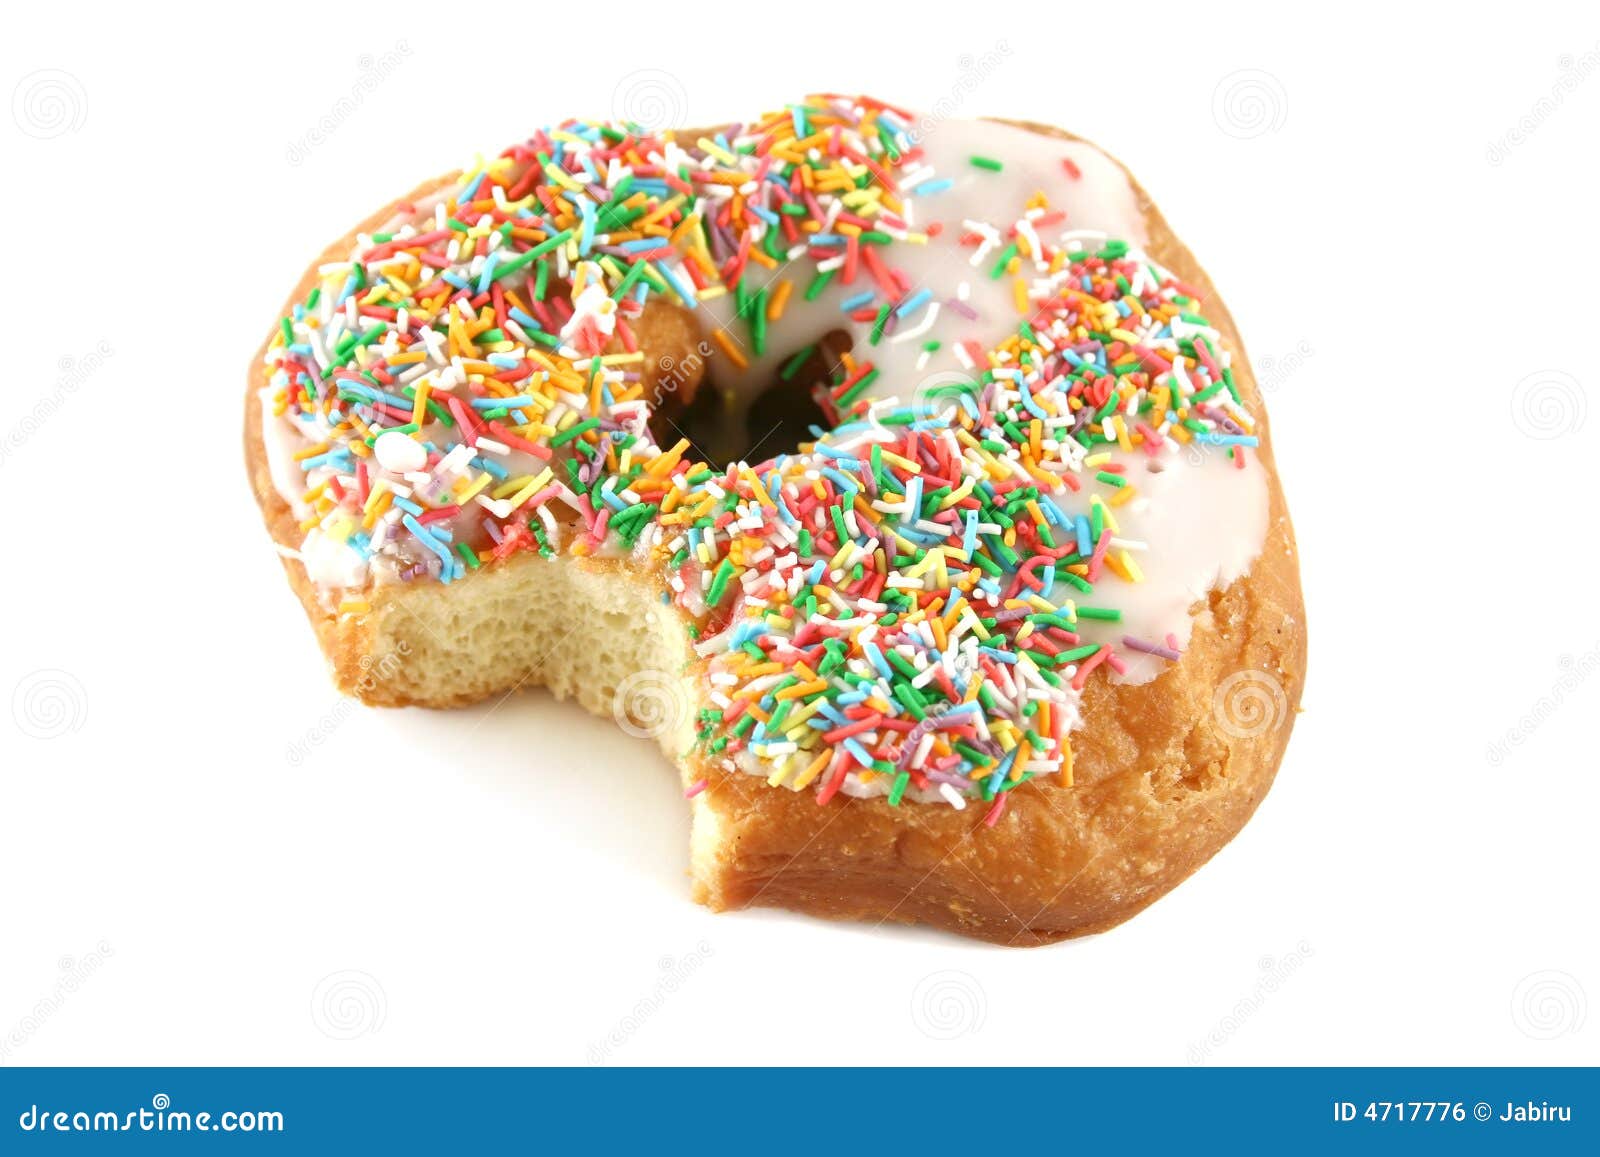 doughnut with hundreds and thousands